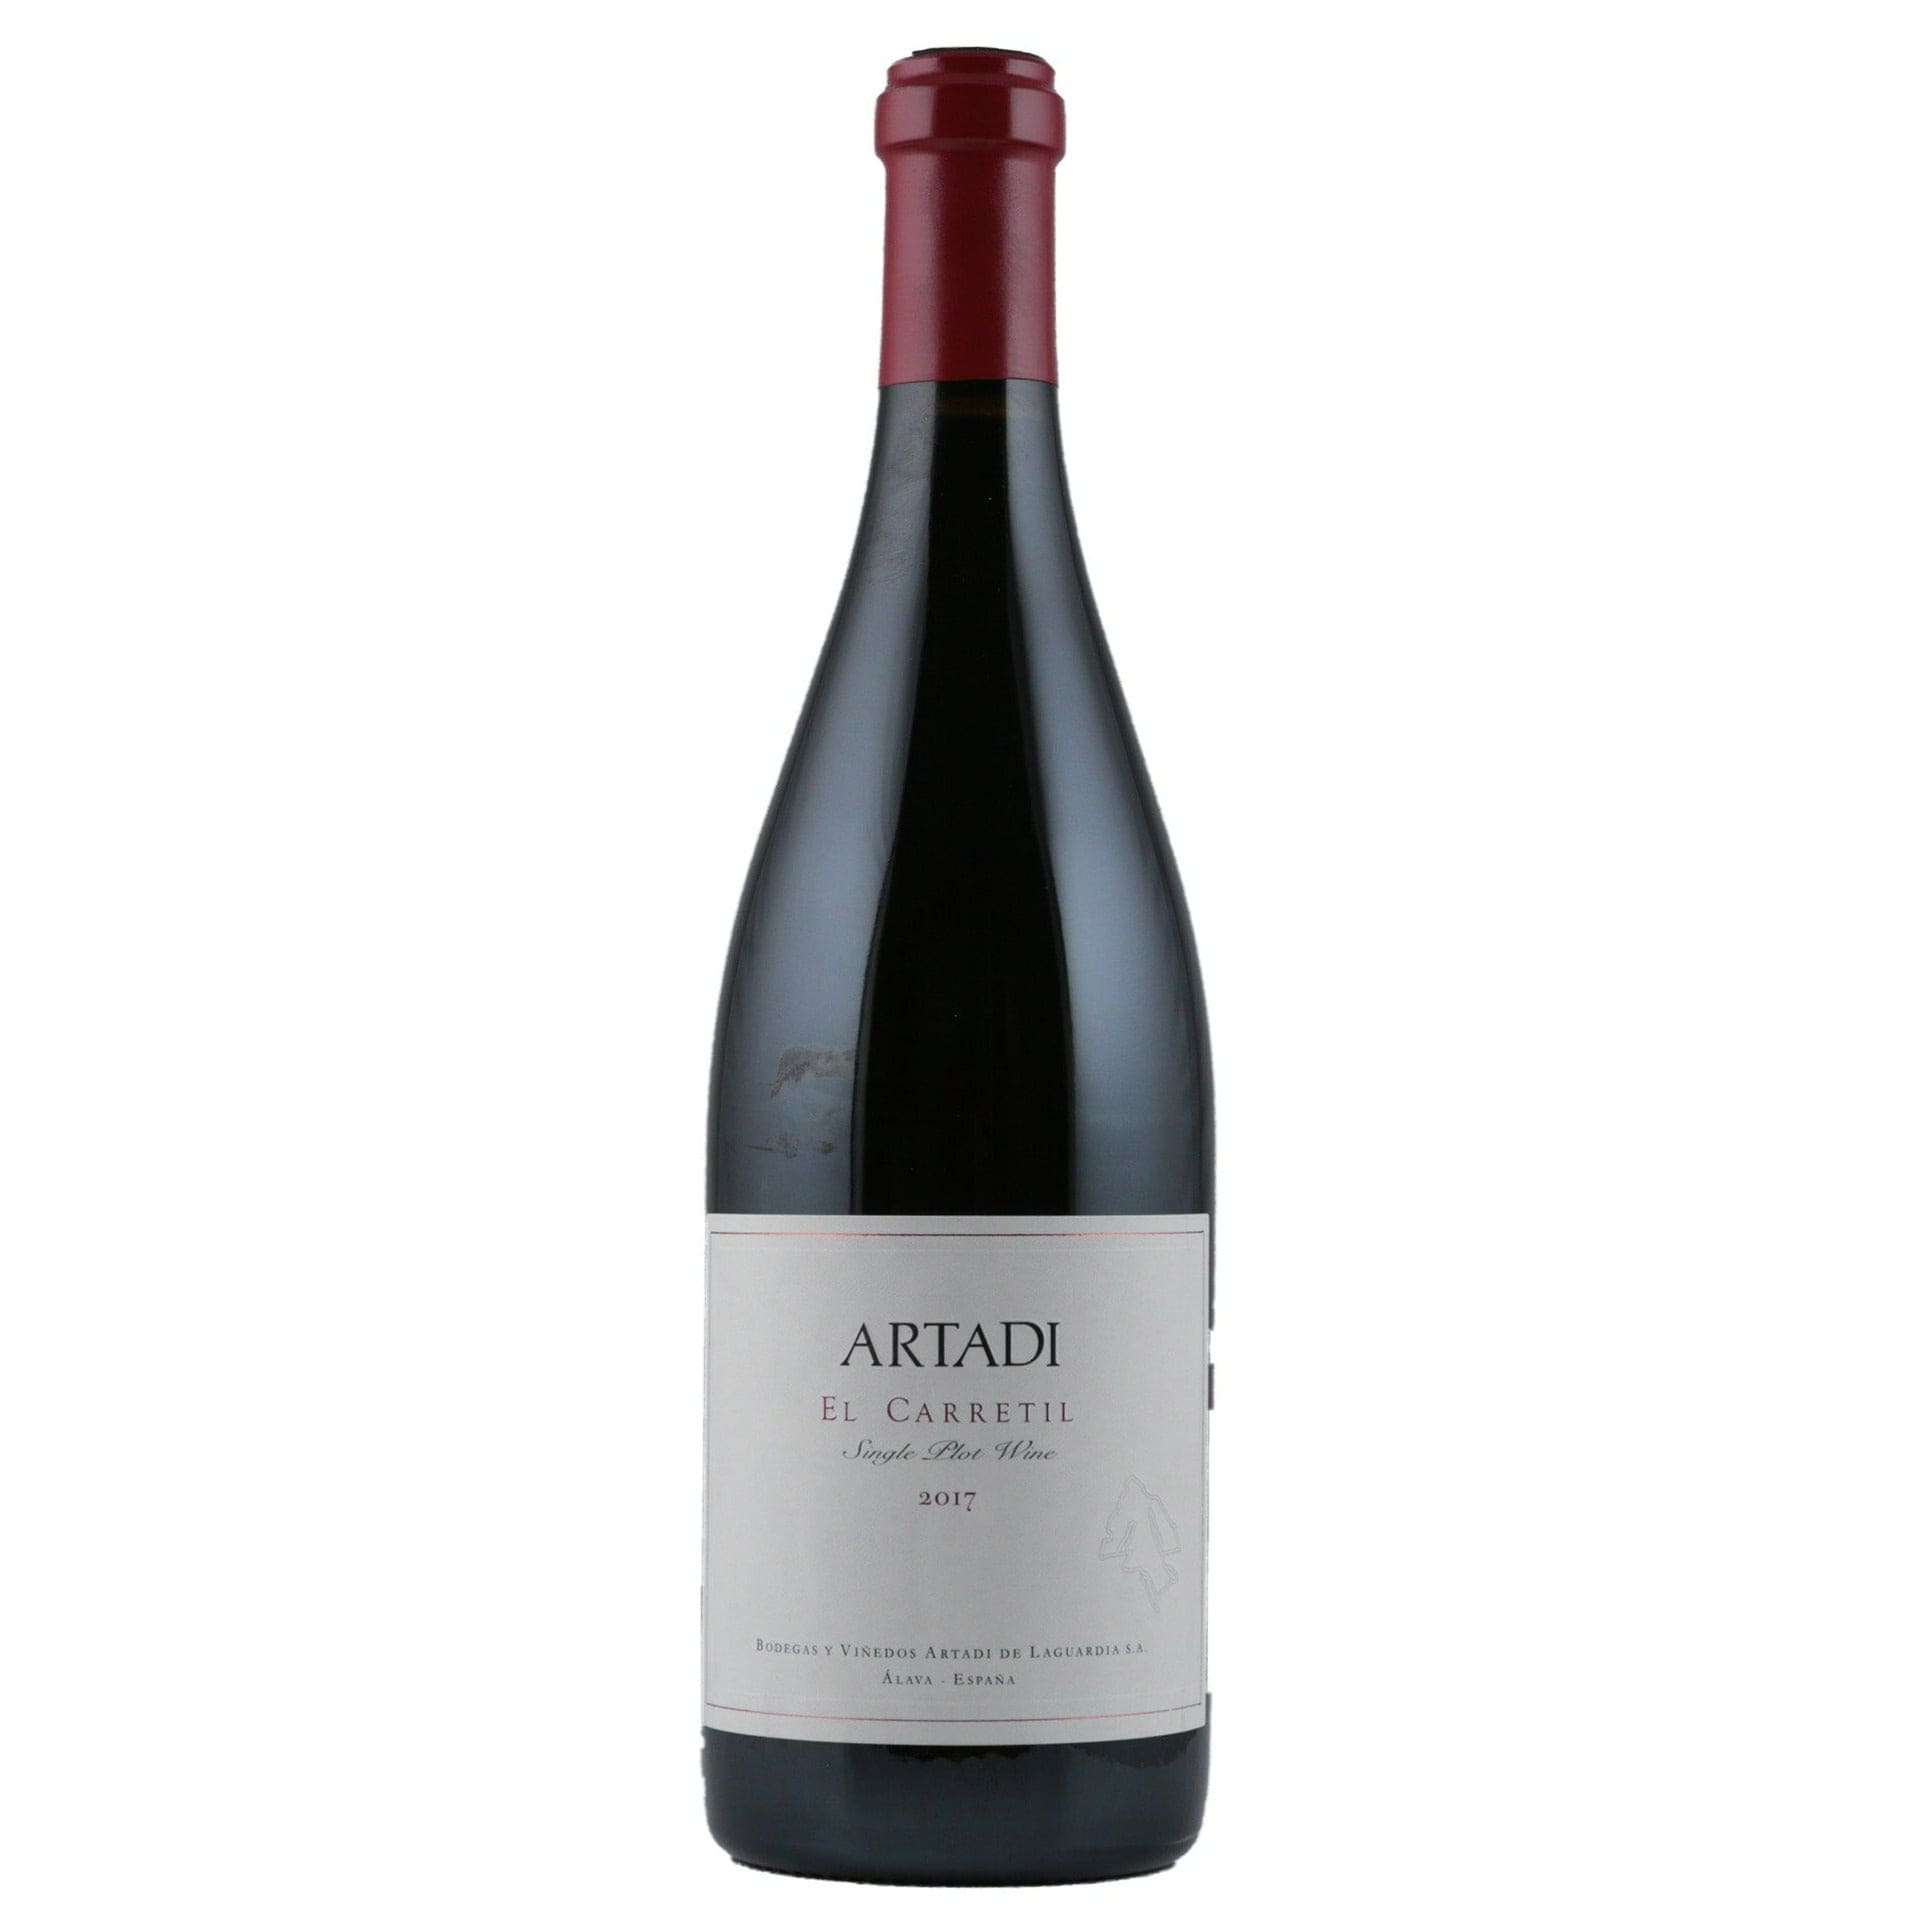 Single bottle of Red wine Artadi, El Carretil, Rioja Alavesa, 2017 100% Tempranillo